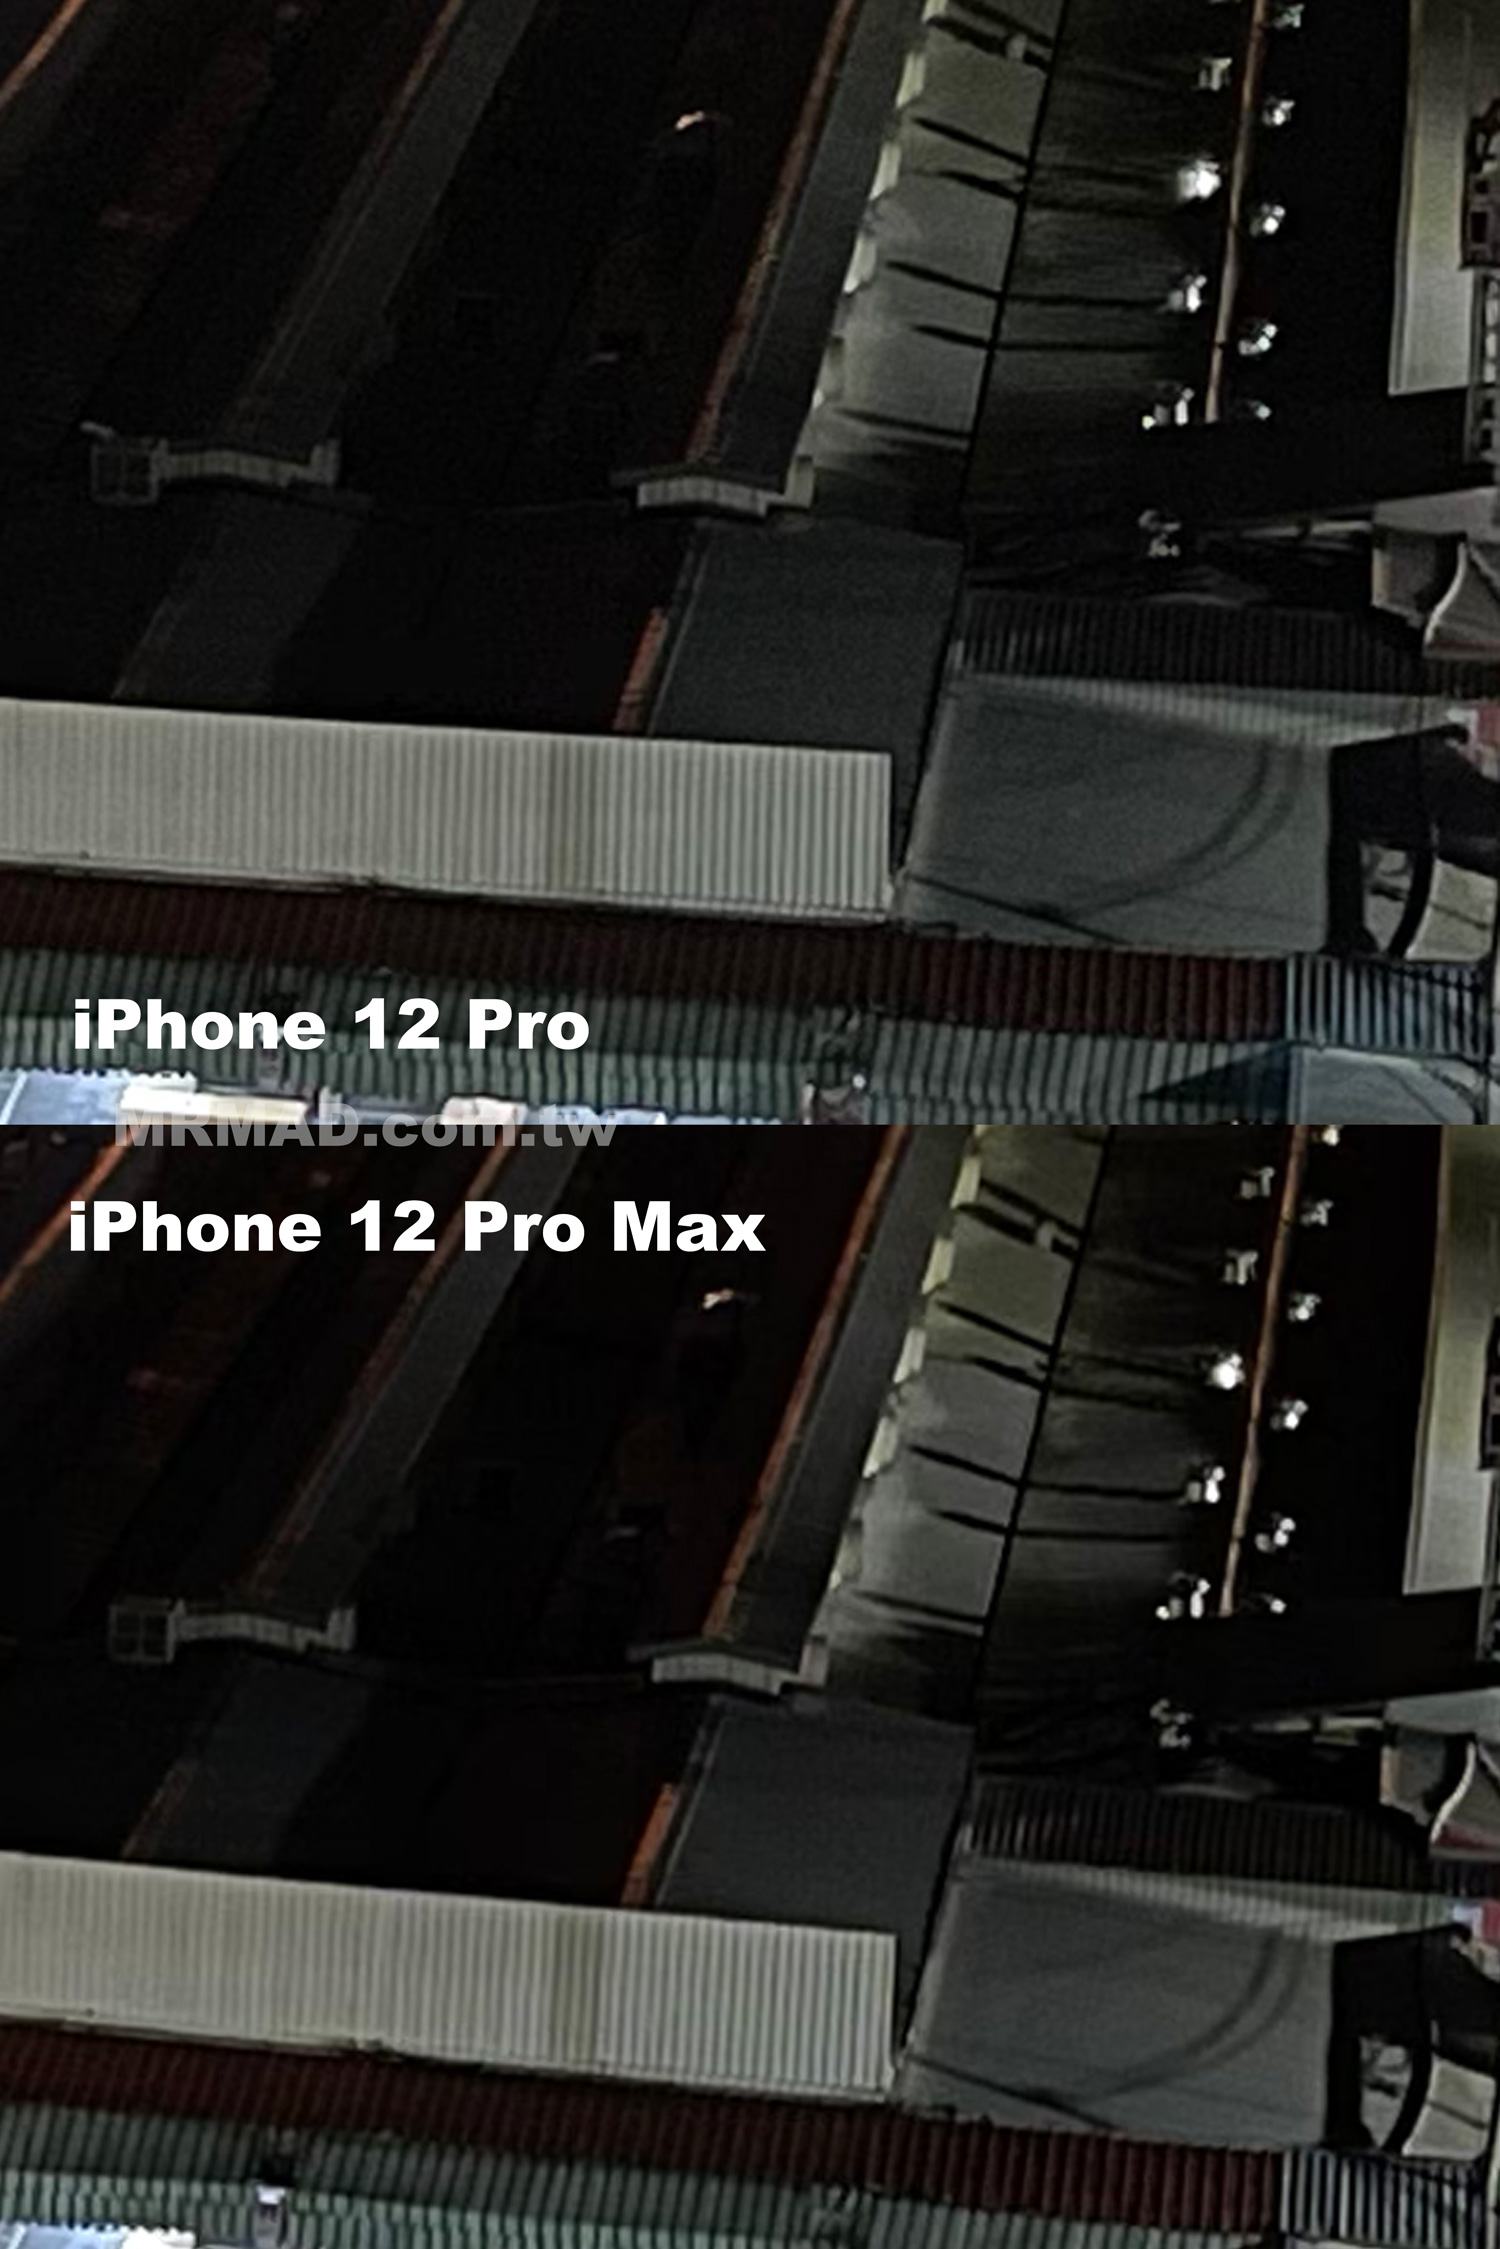 iPhone 12 Pro Max vs. iPhone 12 Pro 夜拍比較2